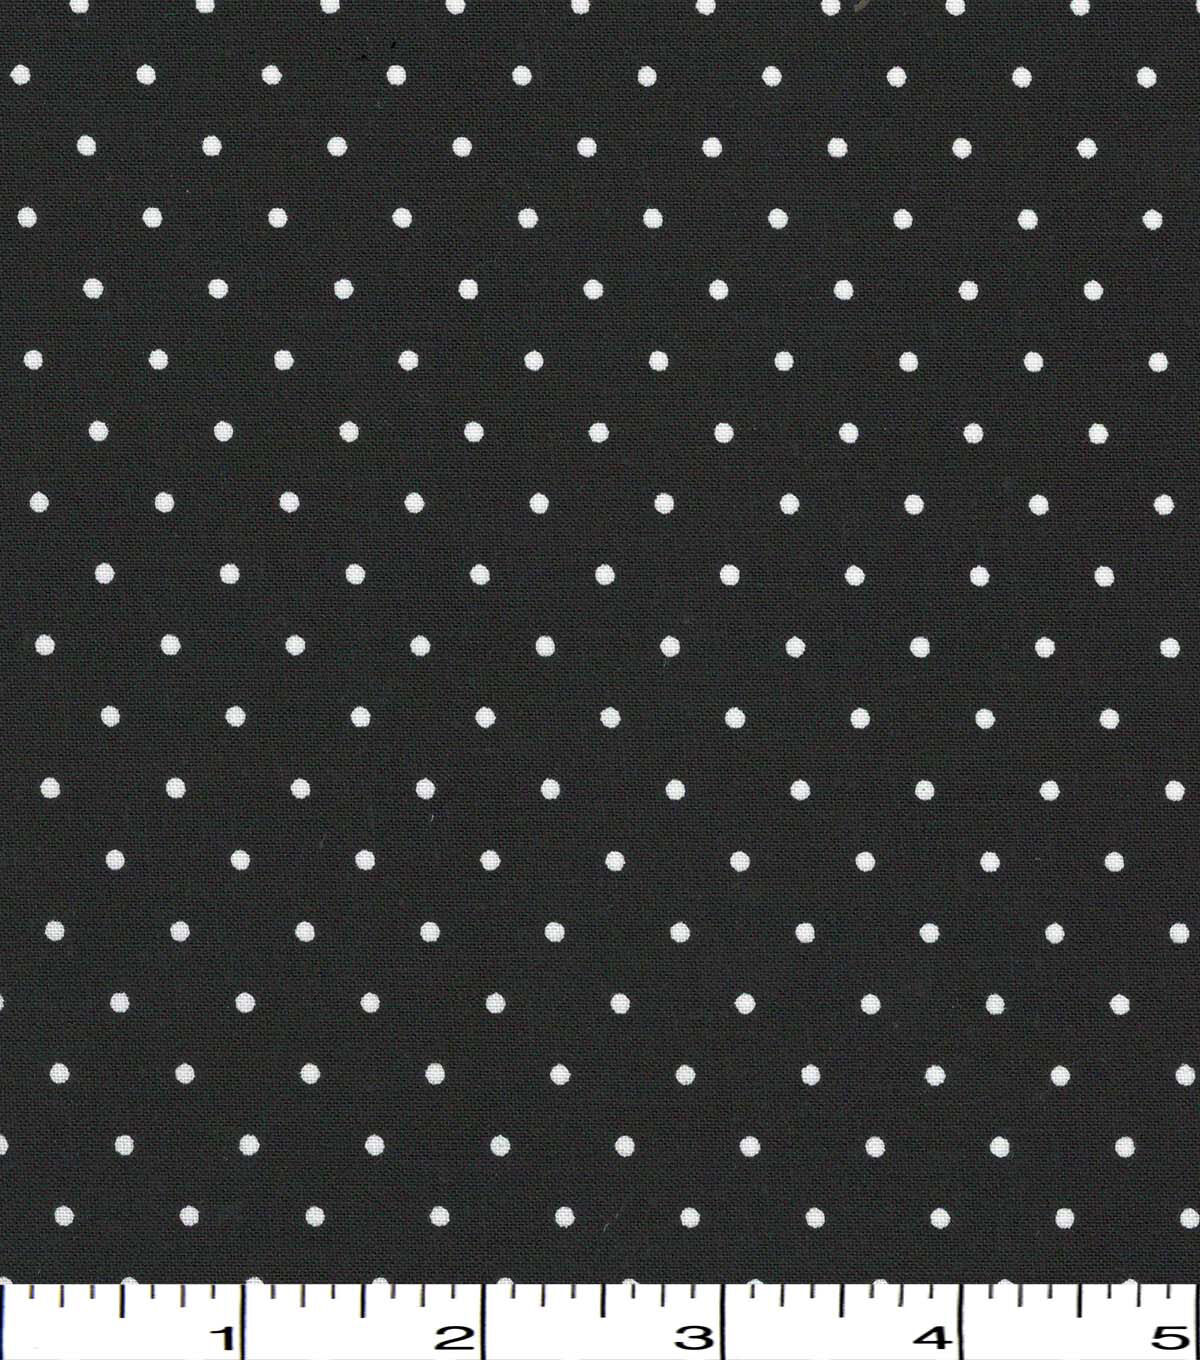 Joann Fabrics Blue Green brown dots woven quilting cotton Polka dot fabric BTY